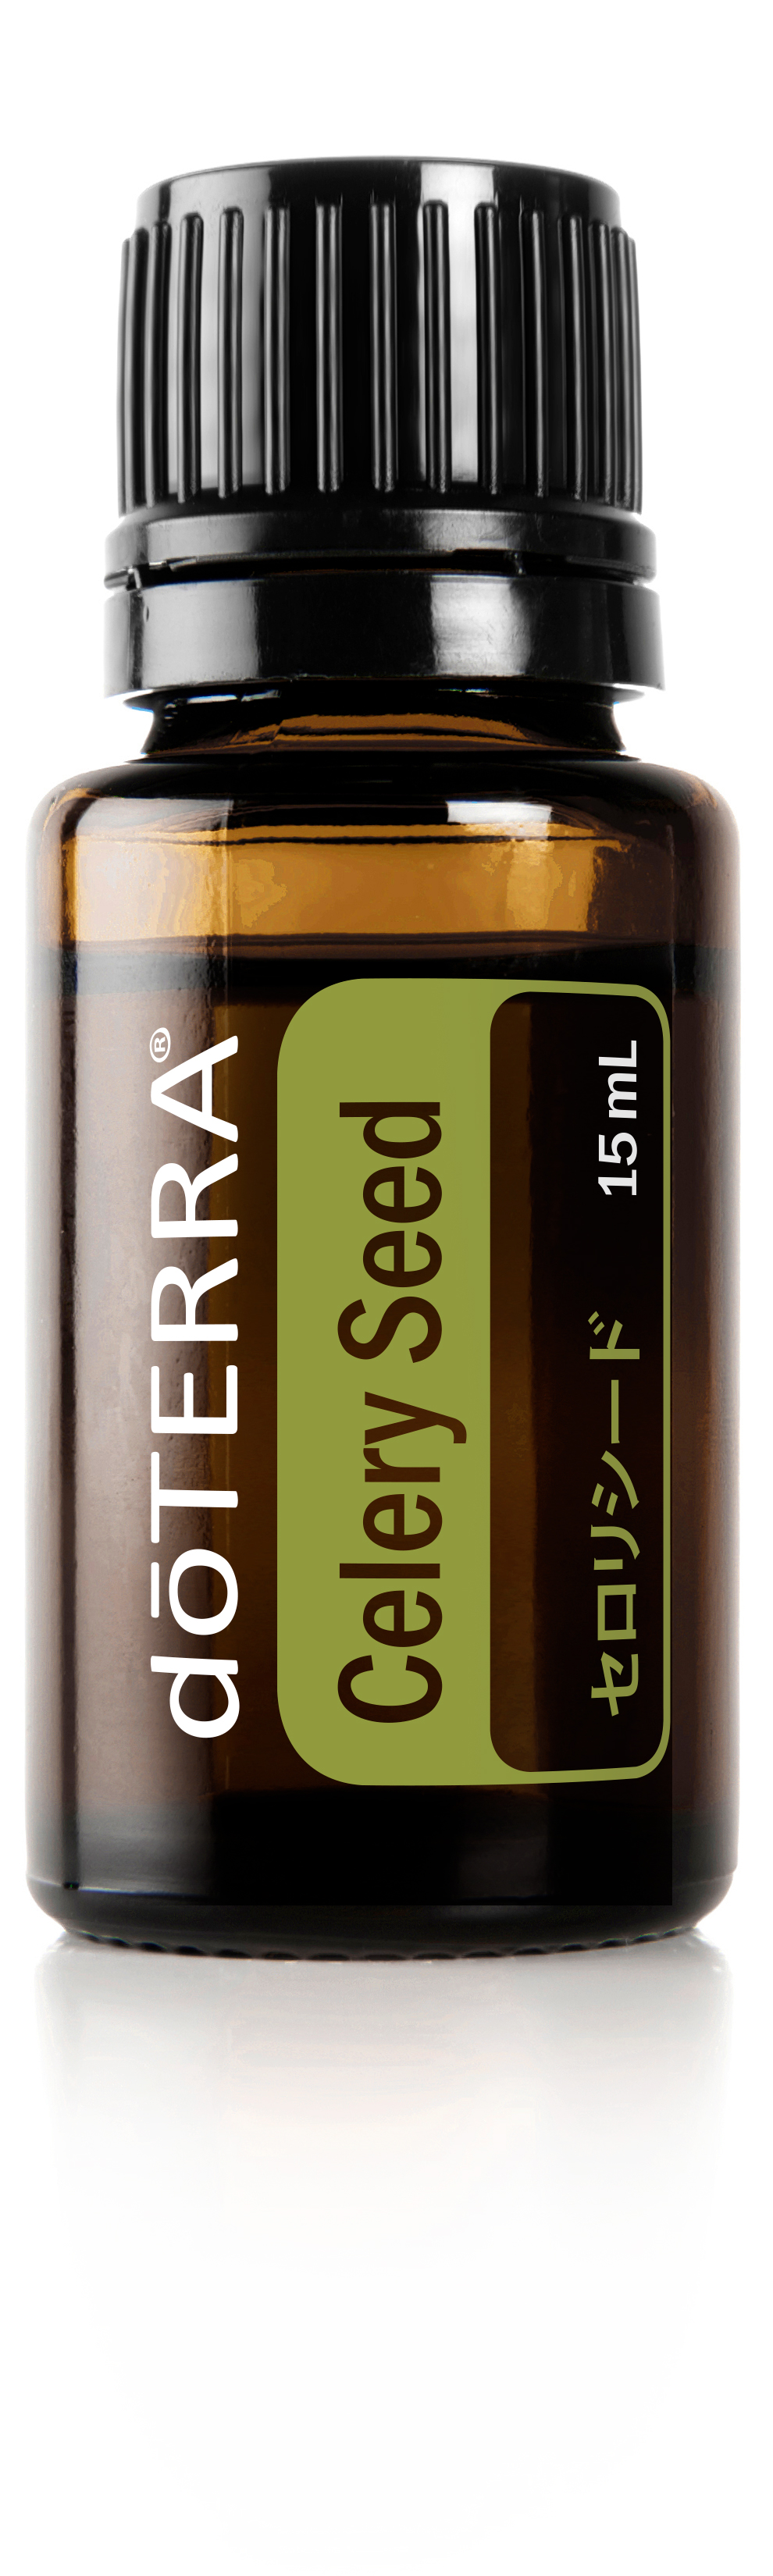 Celery Seed | doTERRA Essential Oils